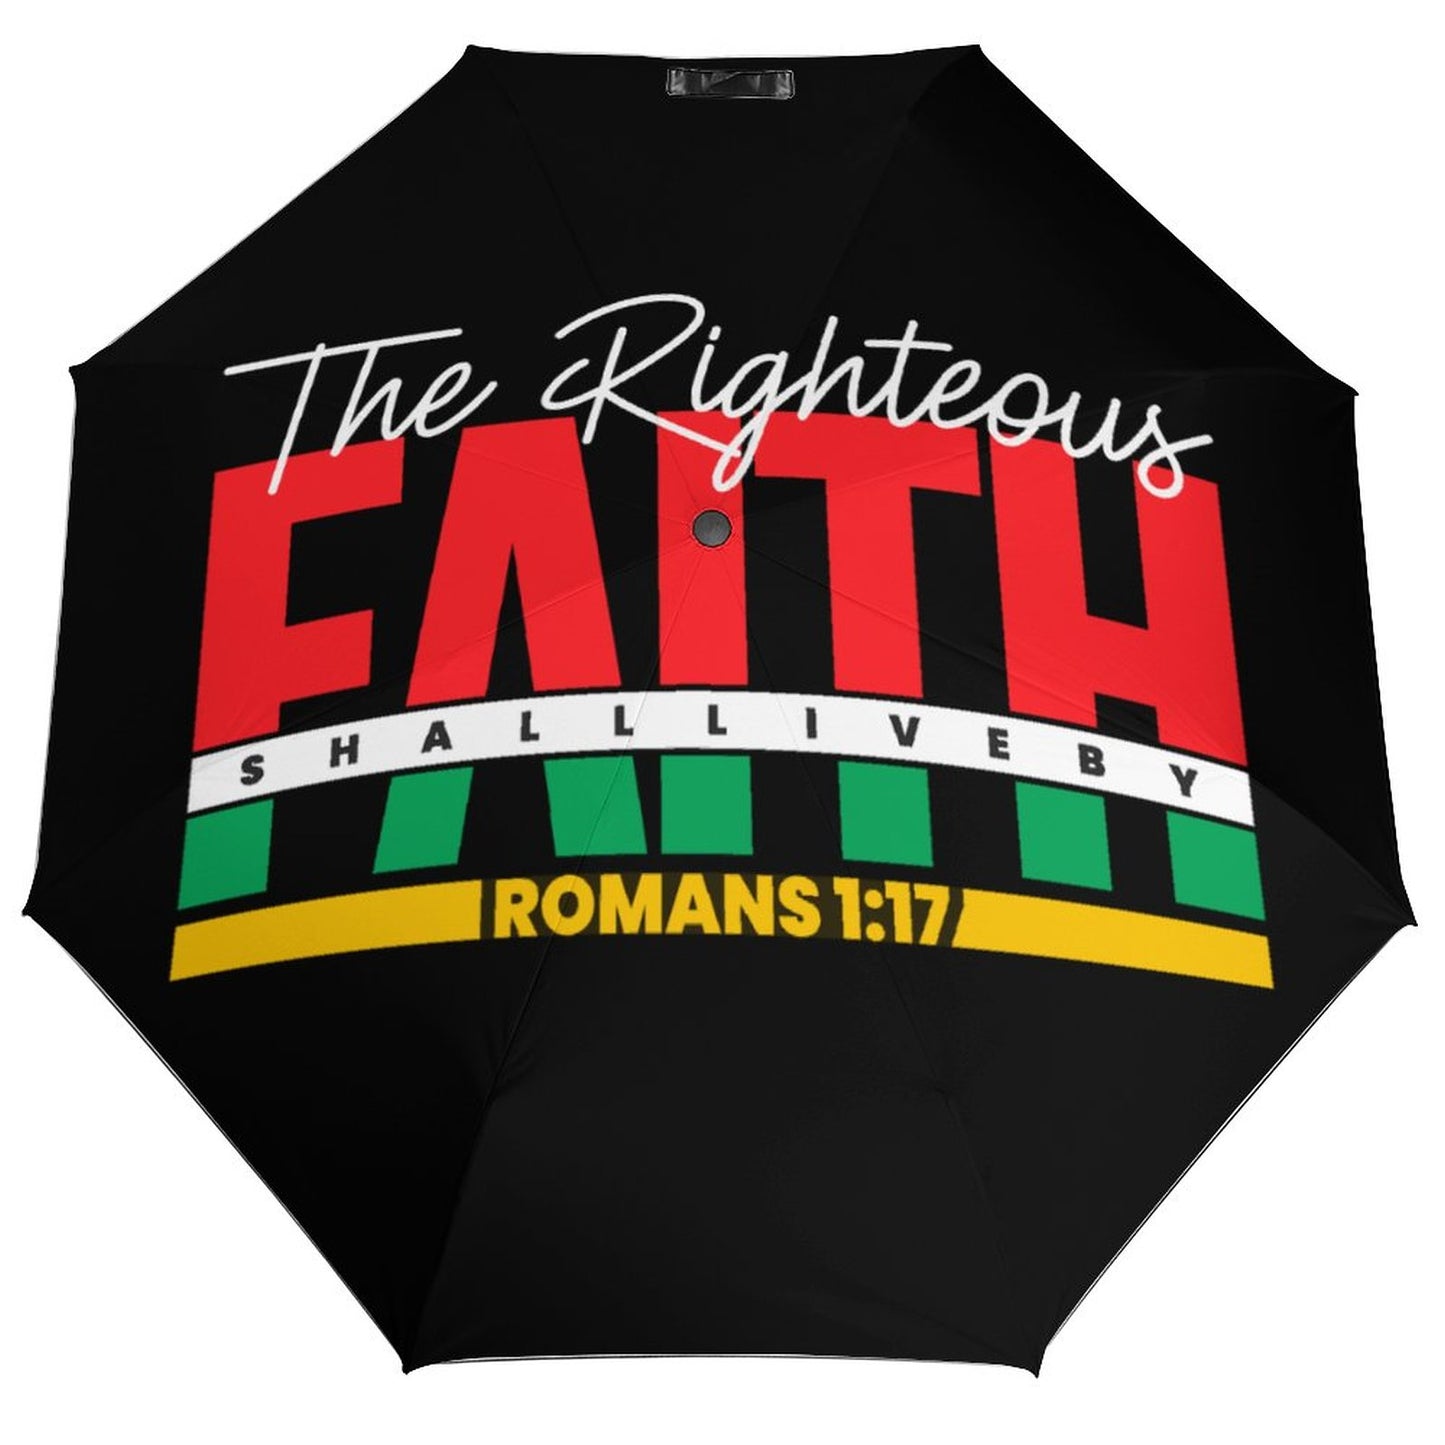 The Righteous Shall Live By Faith Christian Umbrella